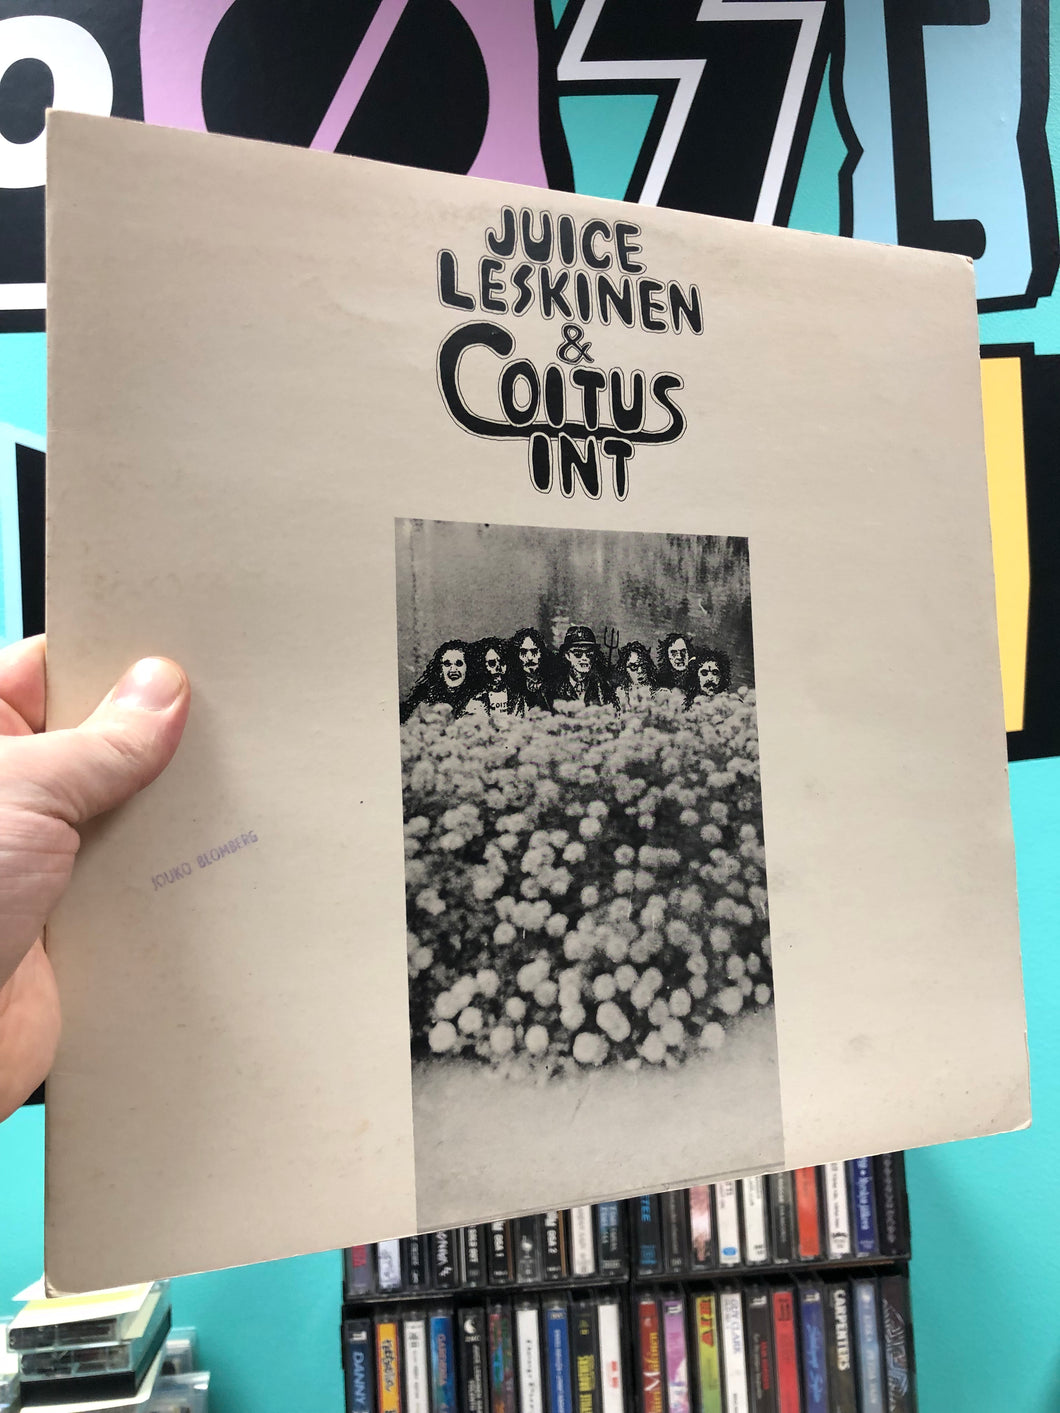 Juice Leskinen & Coitus Int., 1st pressing, Finland 1973